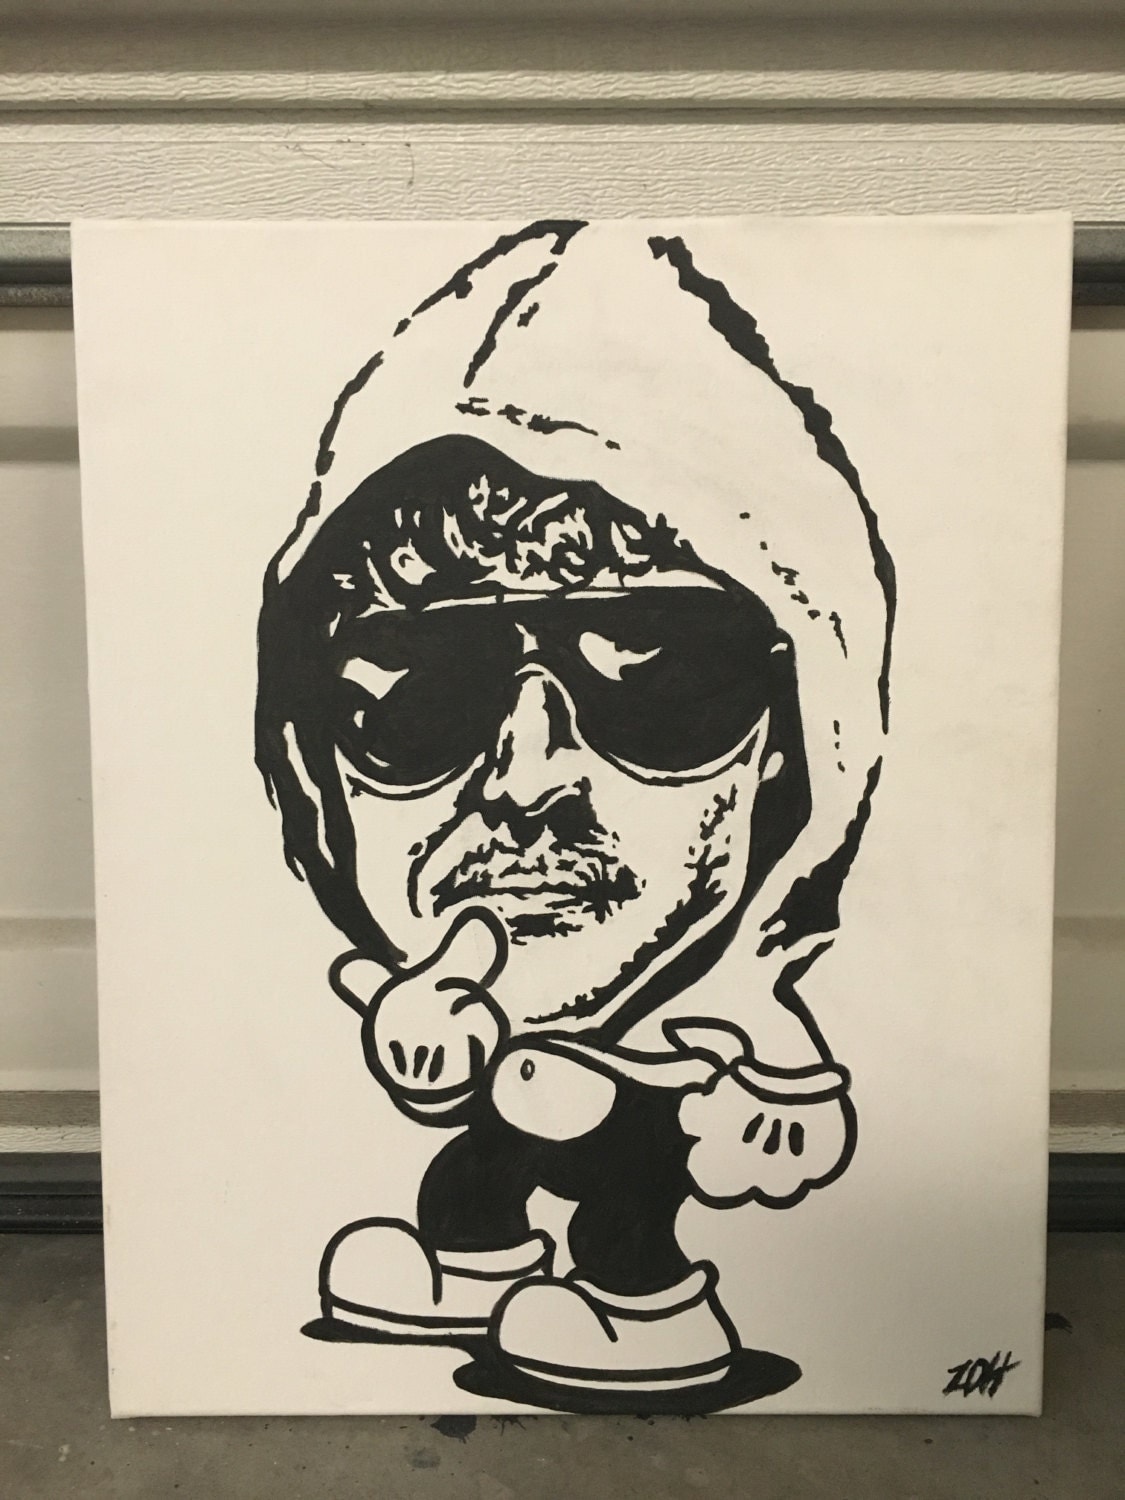 Ted Kaczynski Unabomber painting by nobodywins on Etsy